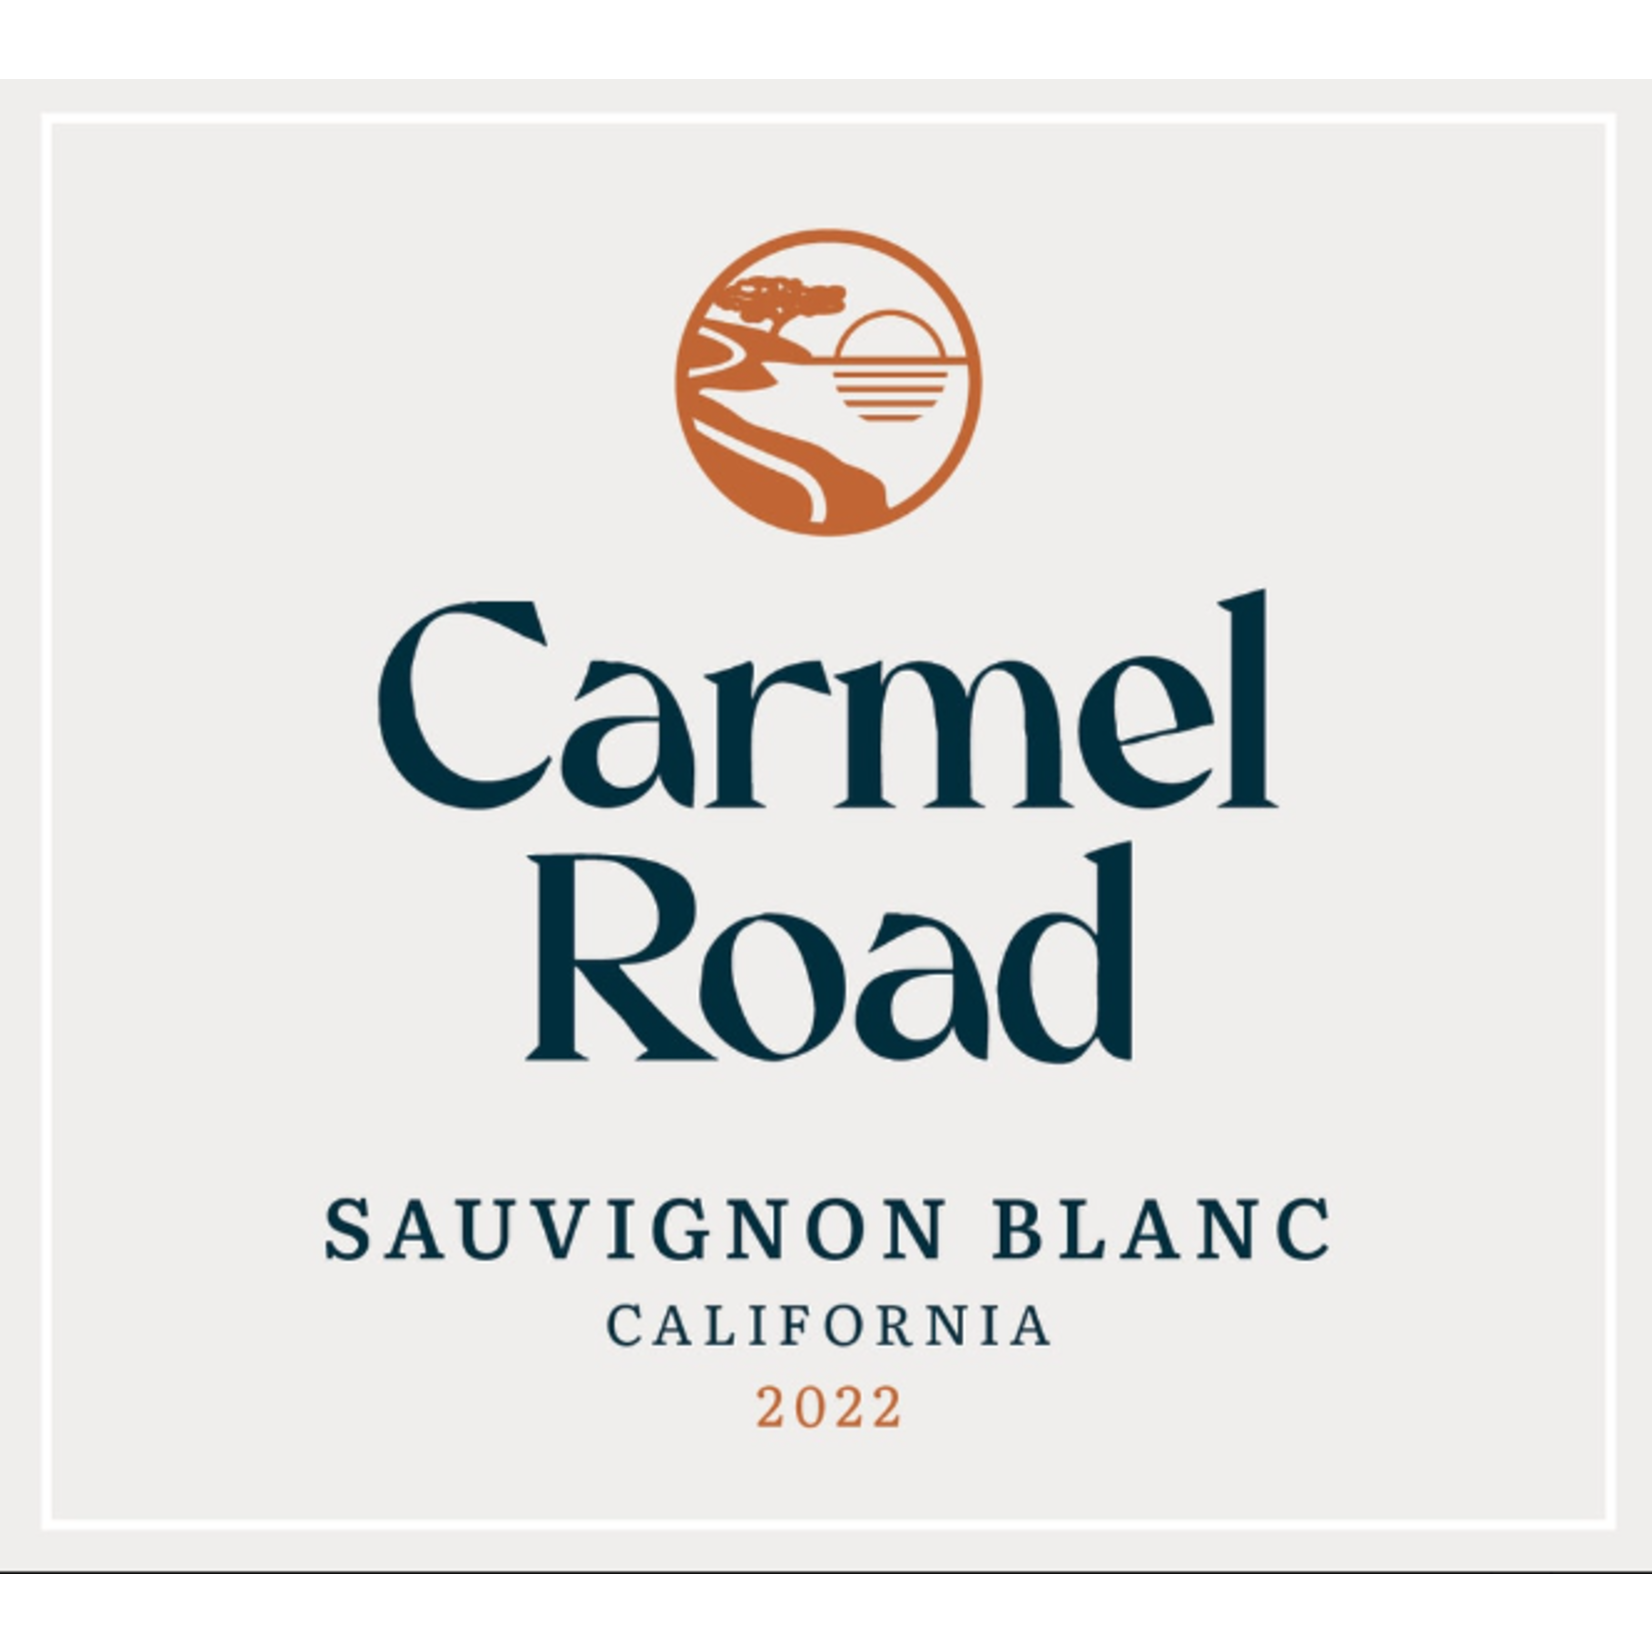 Carmel Road Carmel Road Sauvignon Blanc California 2022